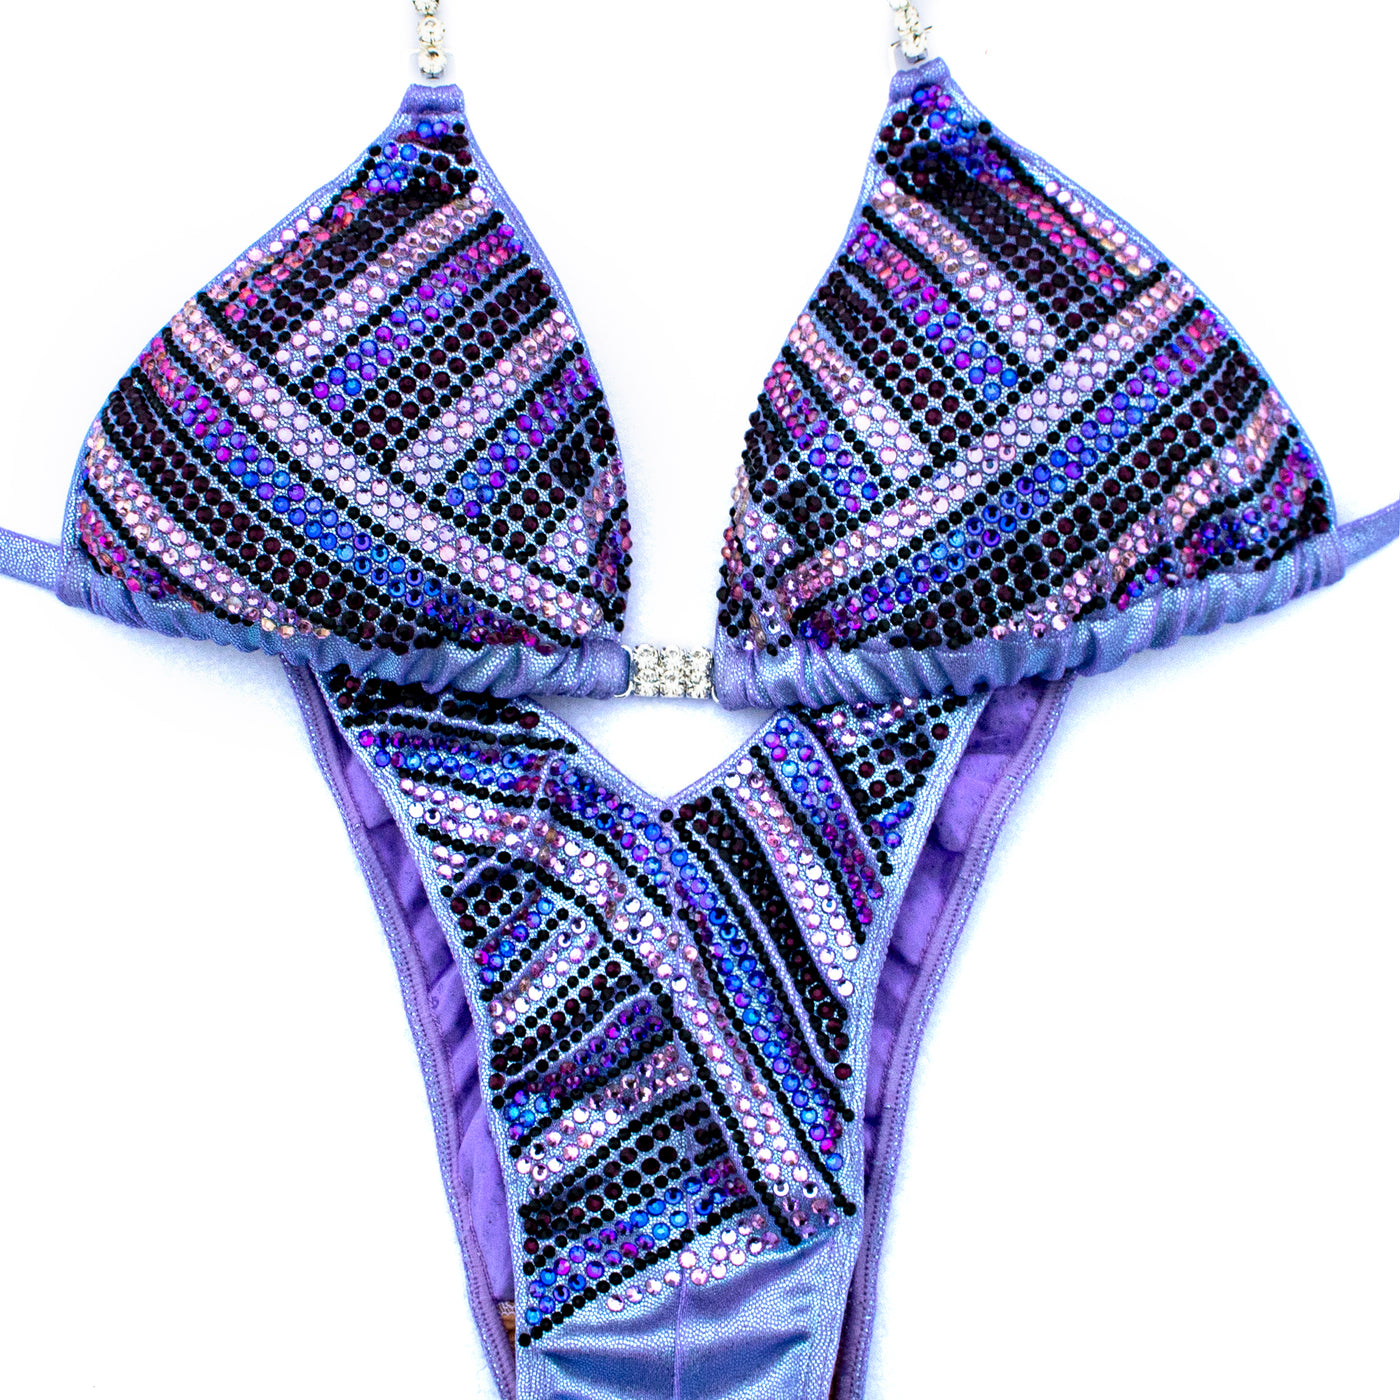 Darcia Figure/WPD Competition Suit S/S | OMG Bikinis Rentals